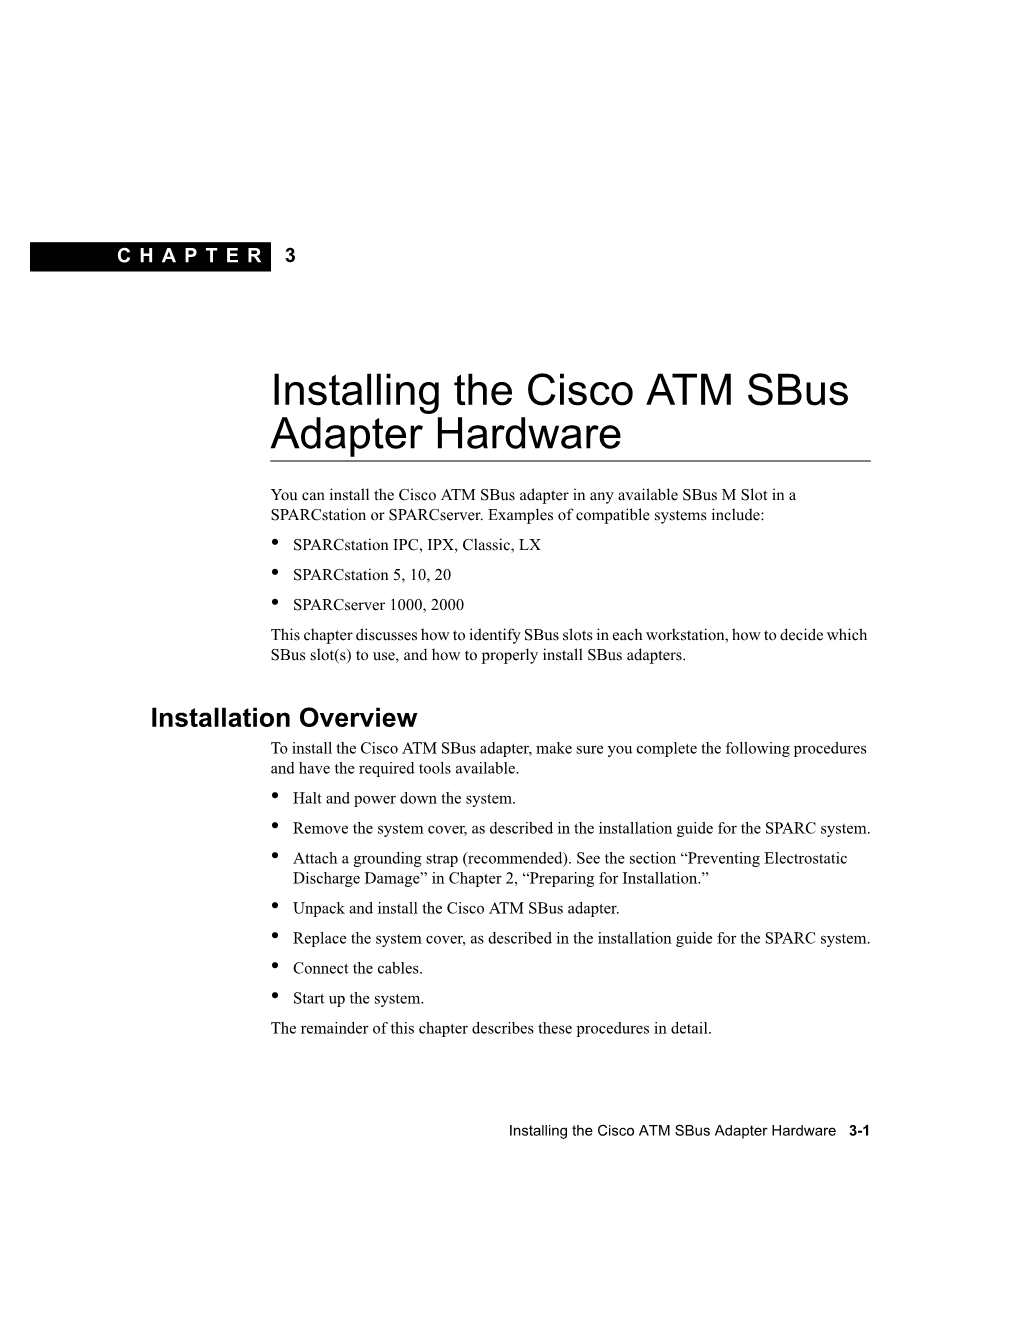 Installing the Cisco ATM Sbus Adapter Hardware